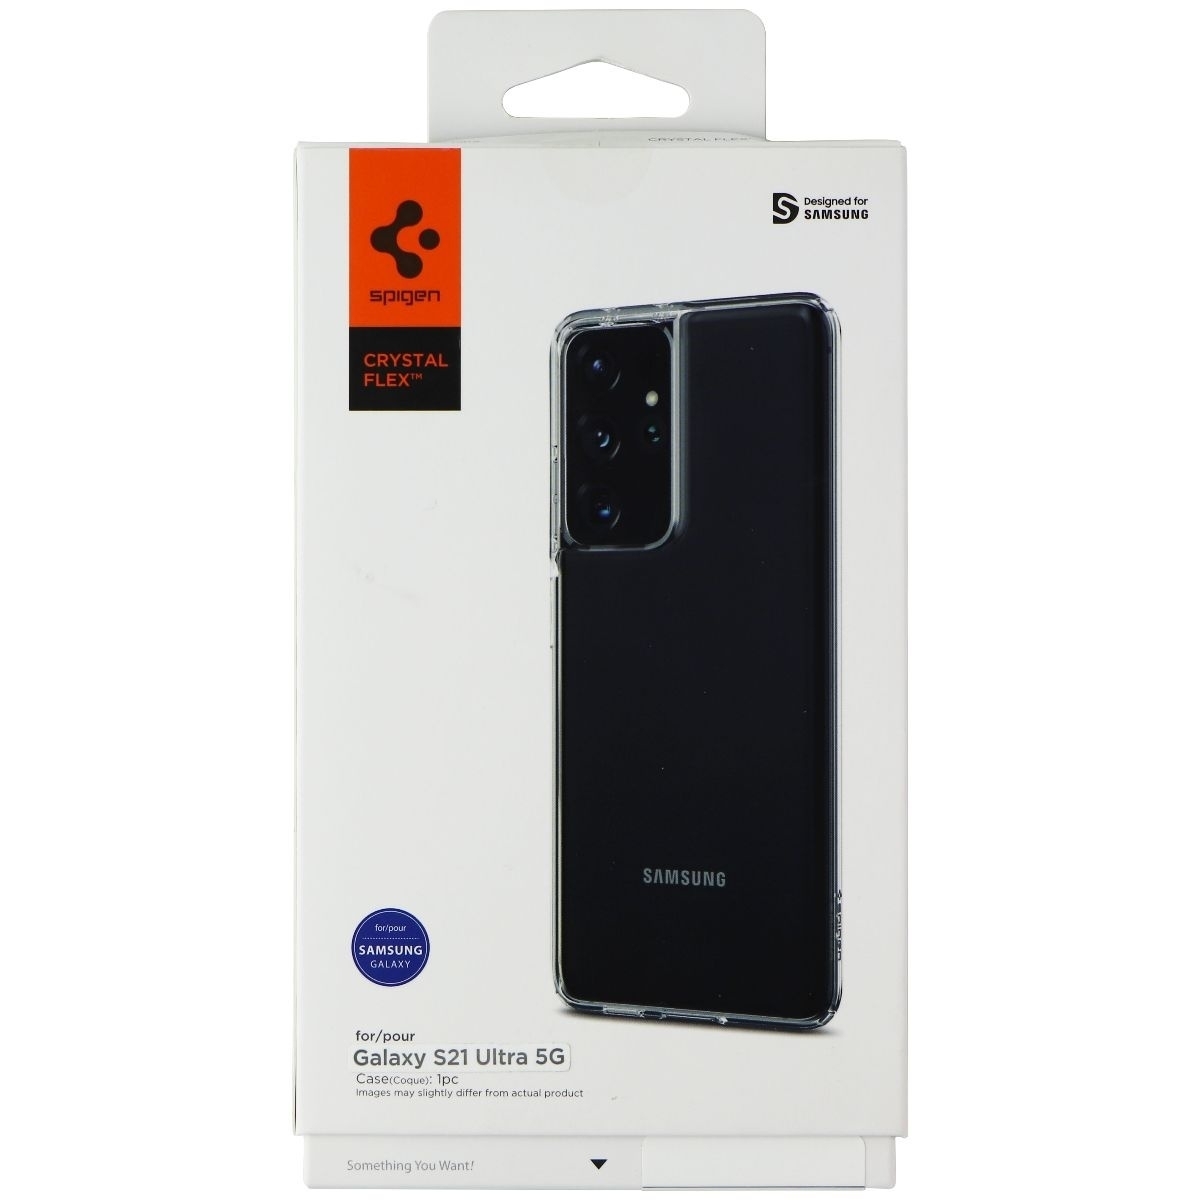 Spigen Crystal Flex Series Gel Case For Samsung Galaxy S21 Ultra 5G - Clear